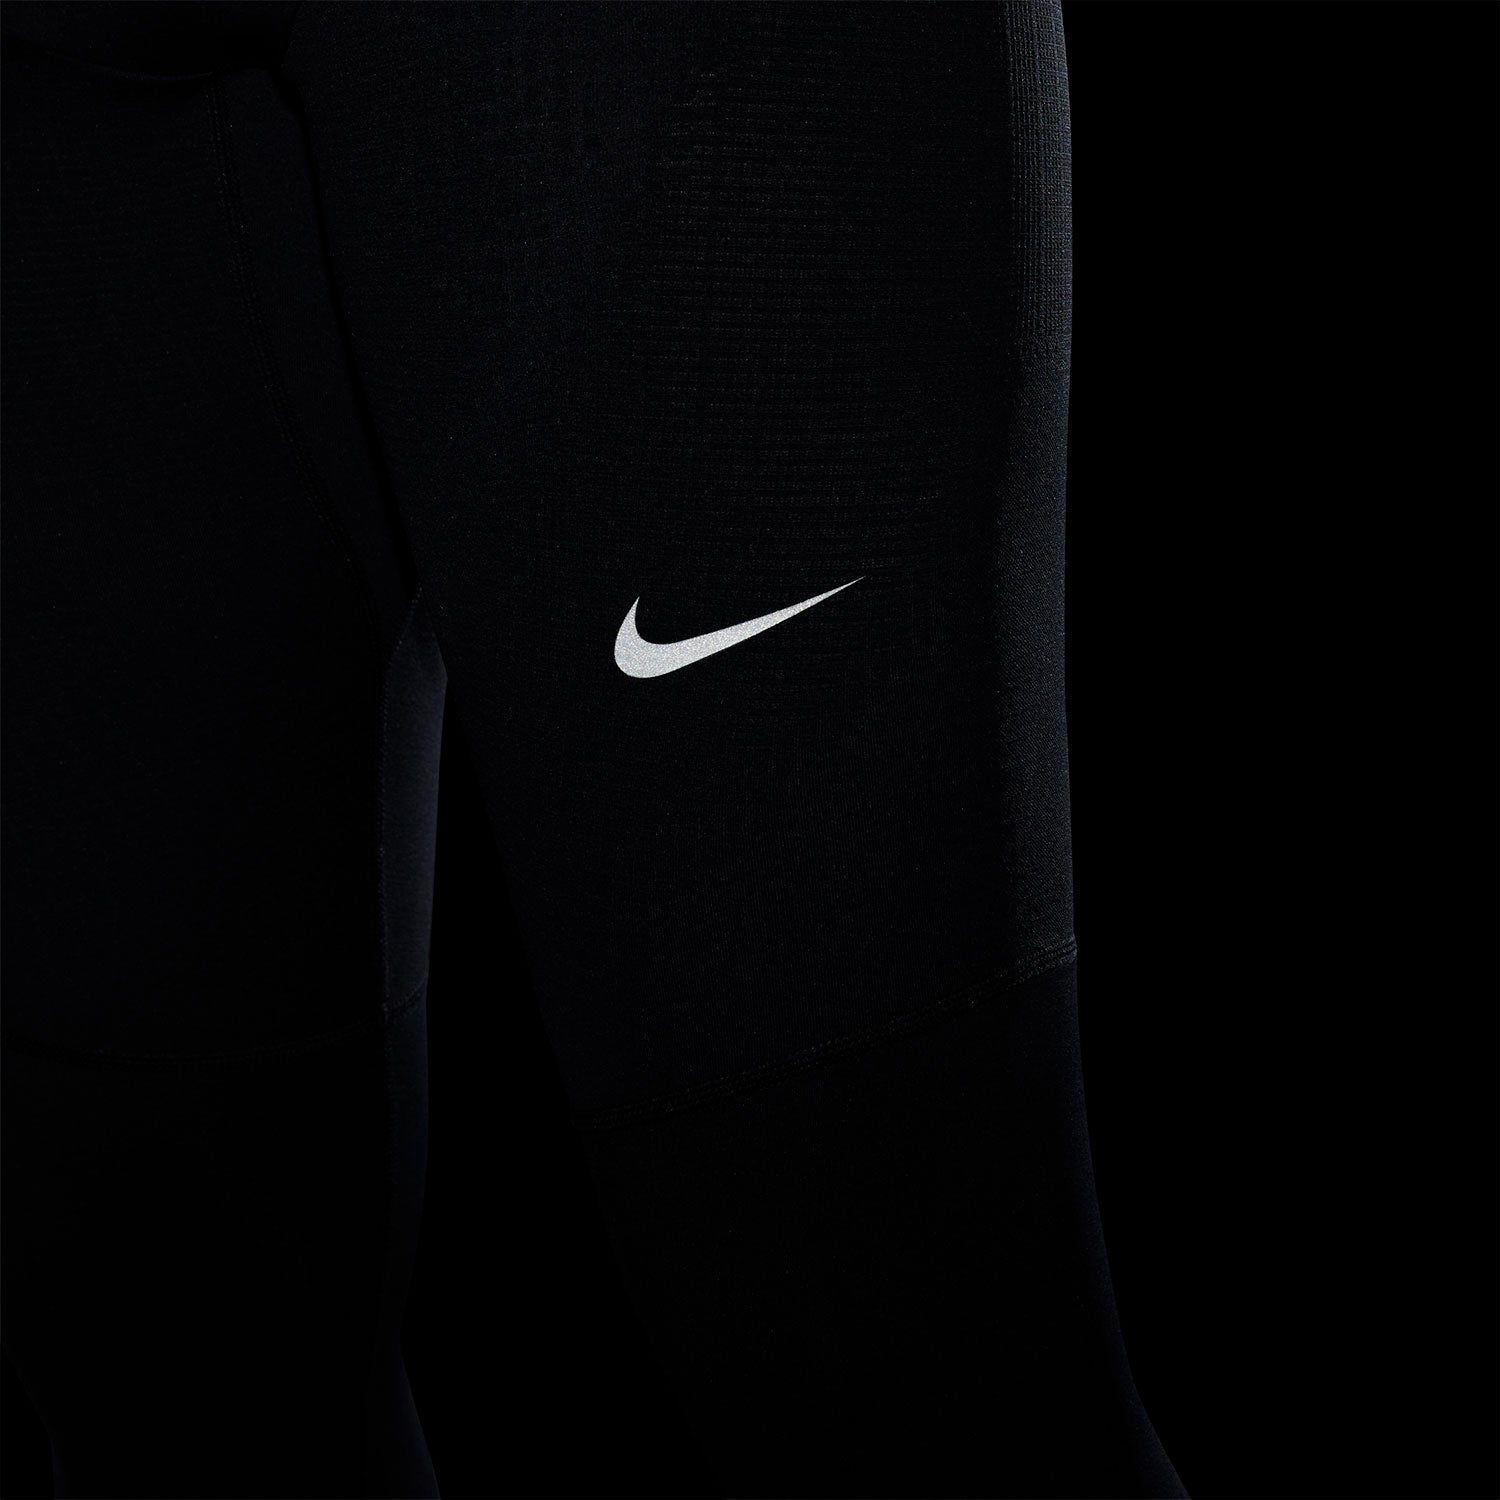 XXL Nike Phenom Elite Men's Running Tights Pants Black CZ8823-010 Dri Fit